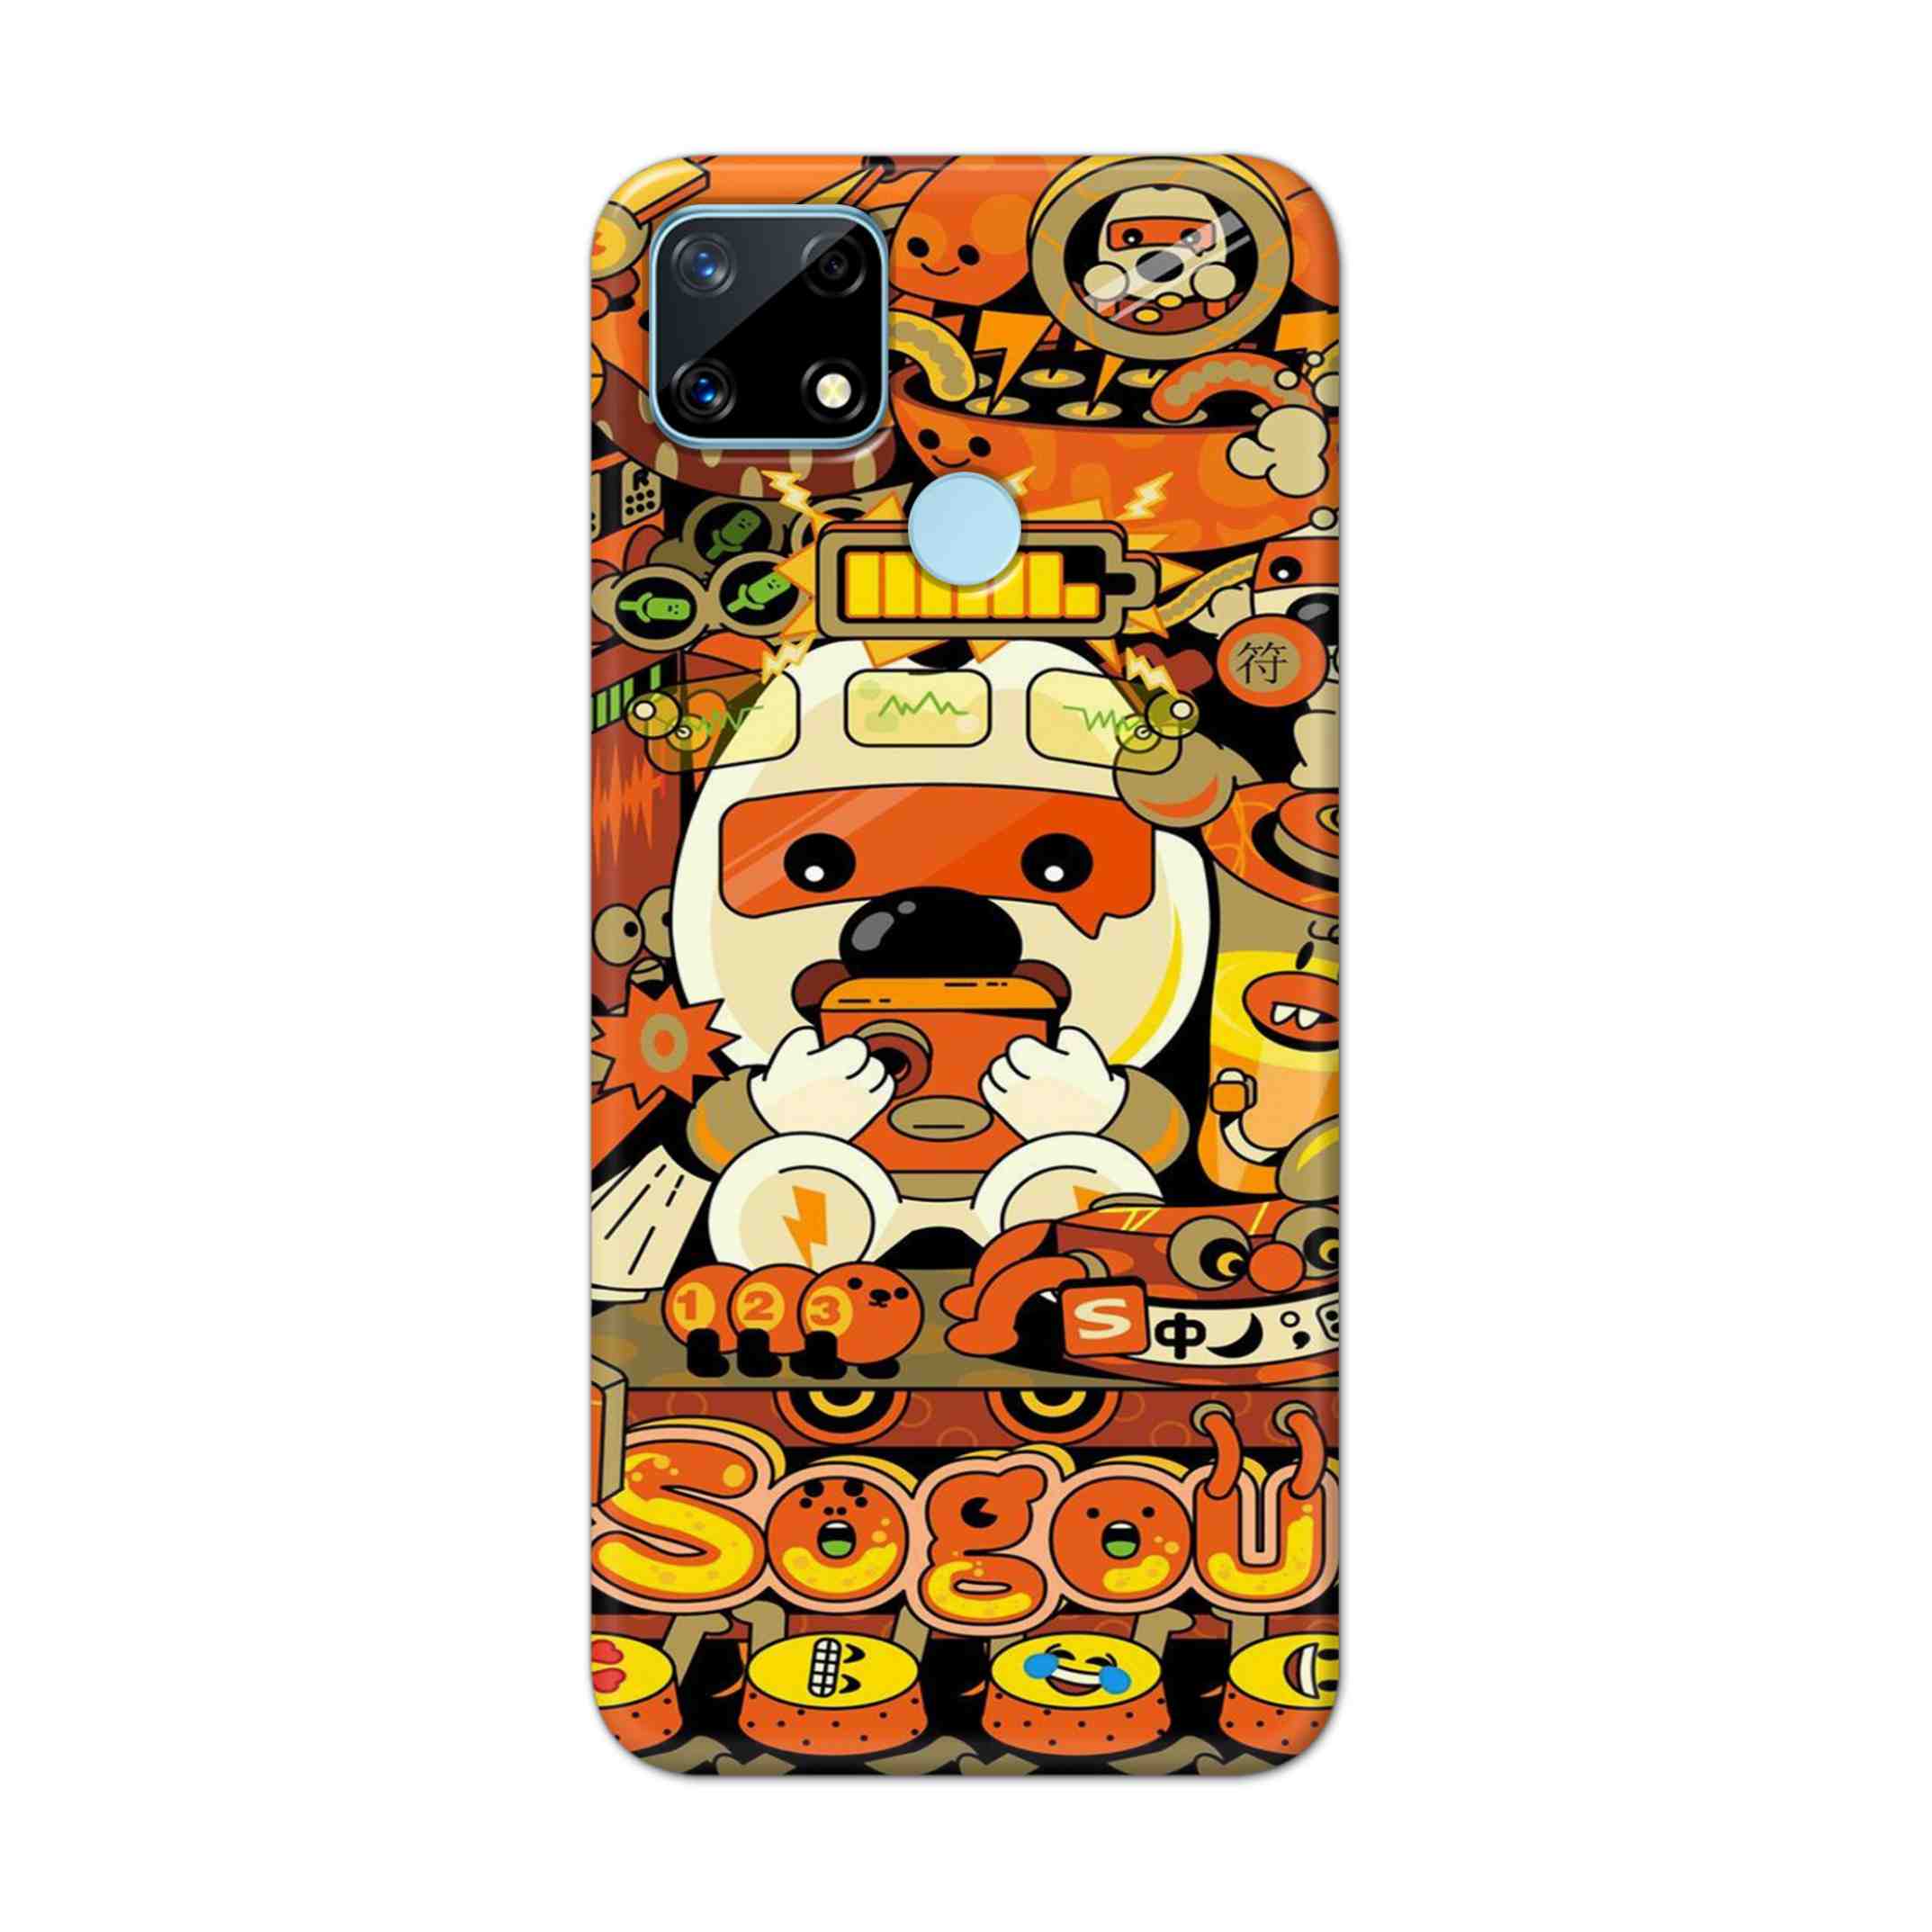 Buy Sogou Hard Back Mobile Phone Case Cover For Realme Narzo 20 Online